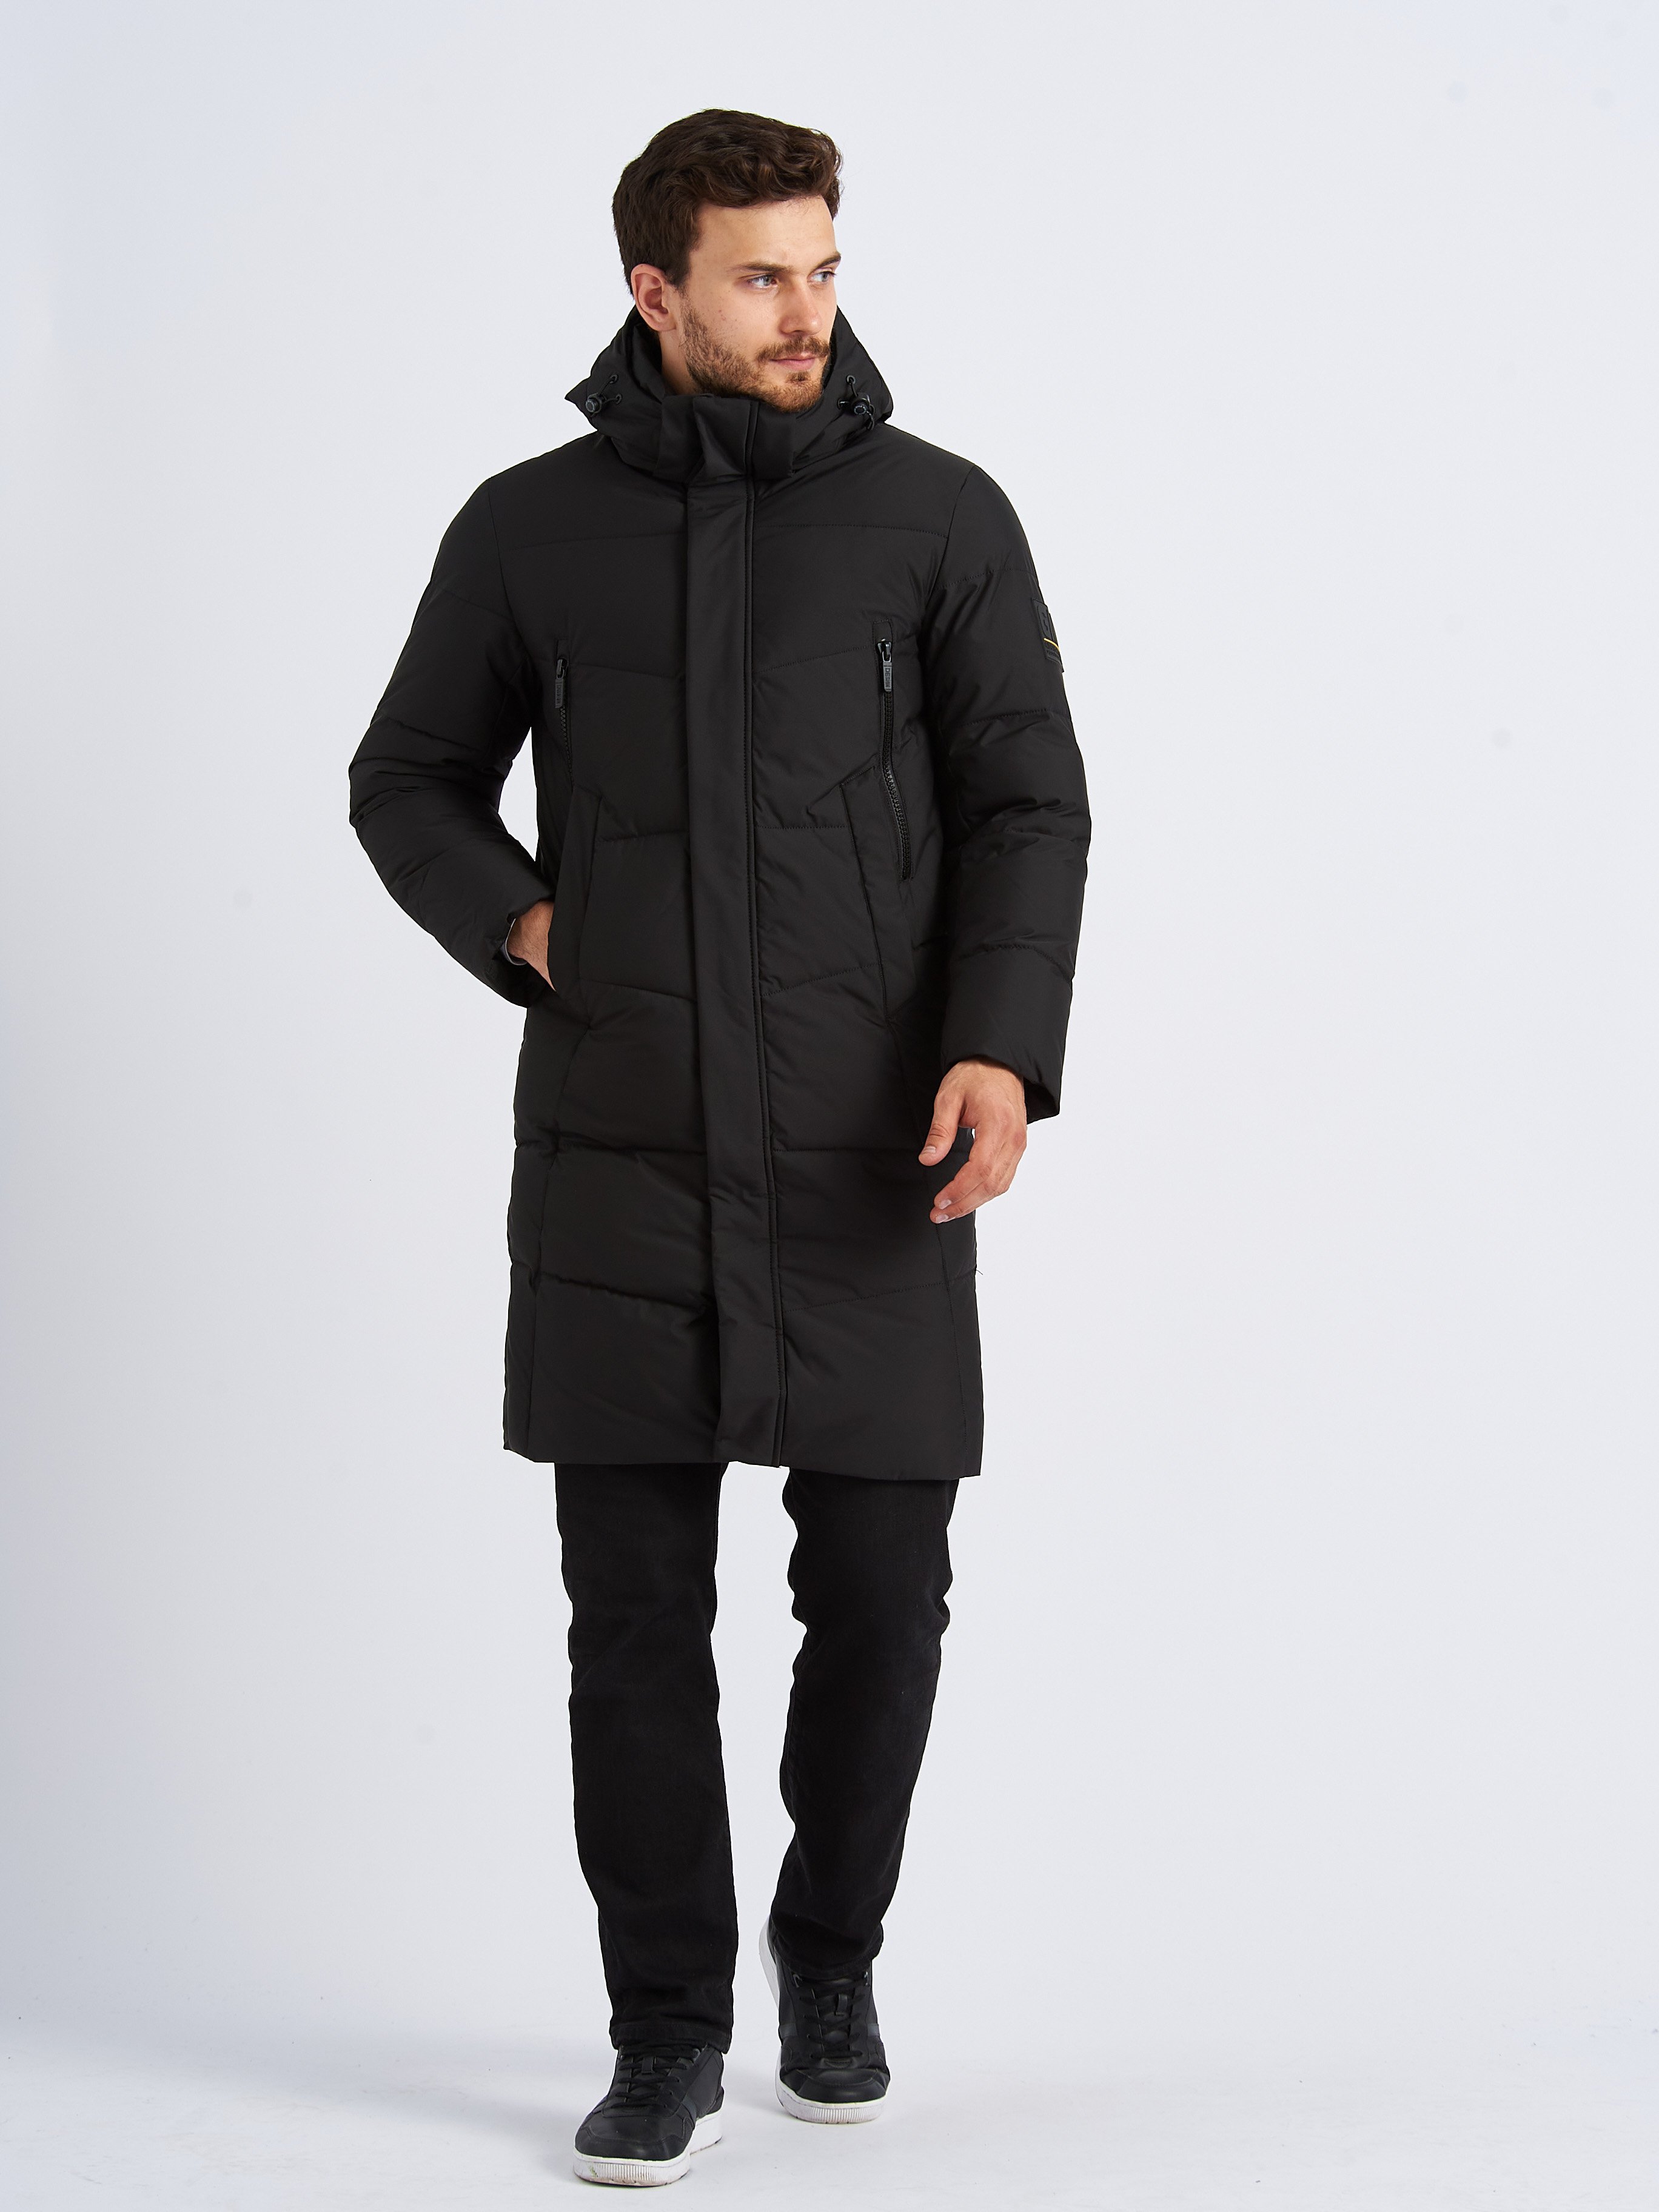 Пальто Grizman для мужчин, чёрное, размер 56, 71715